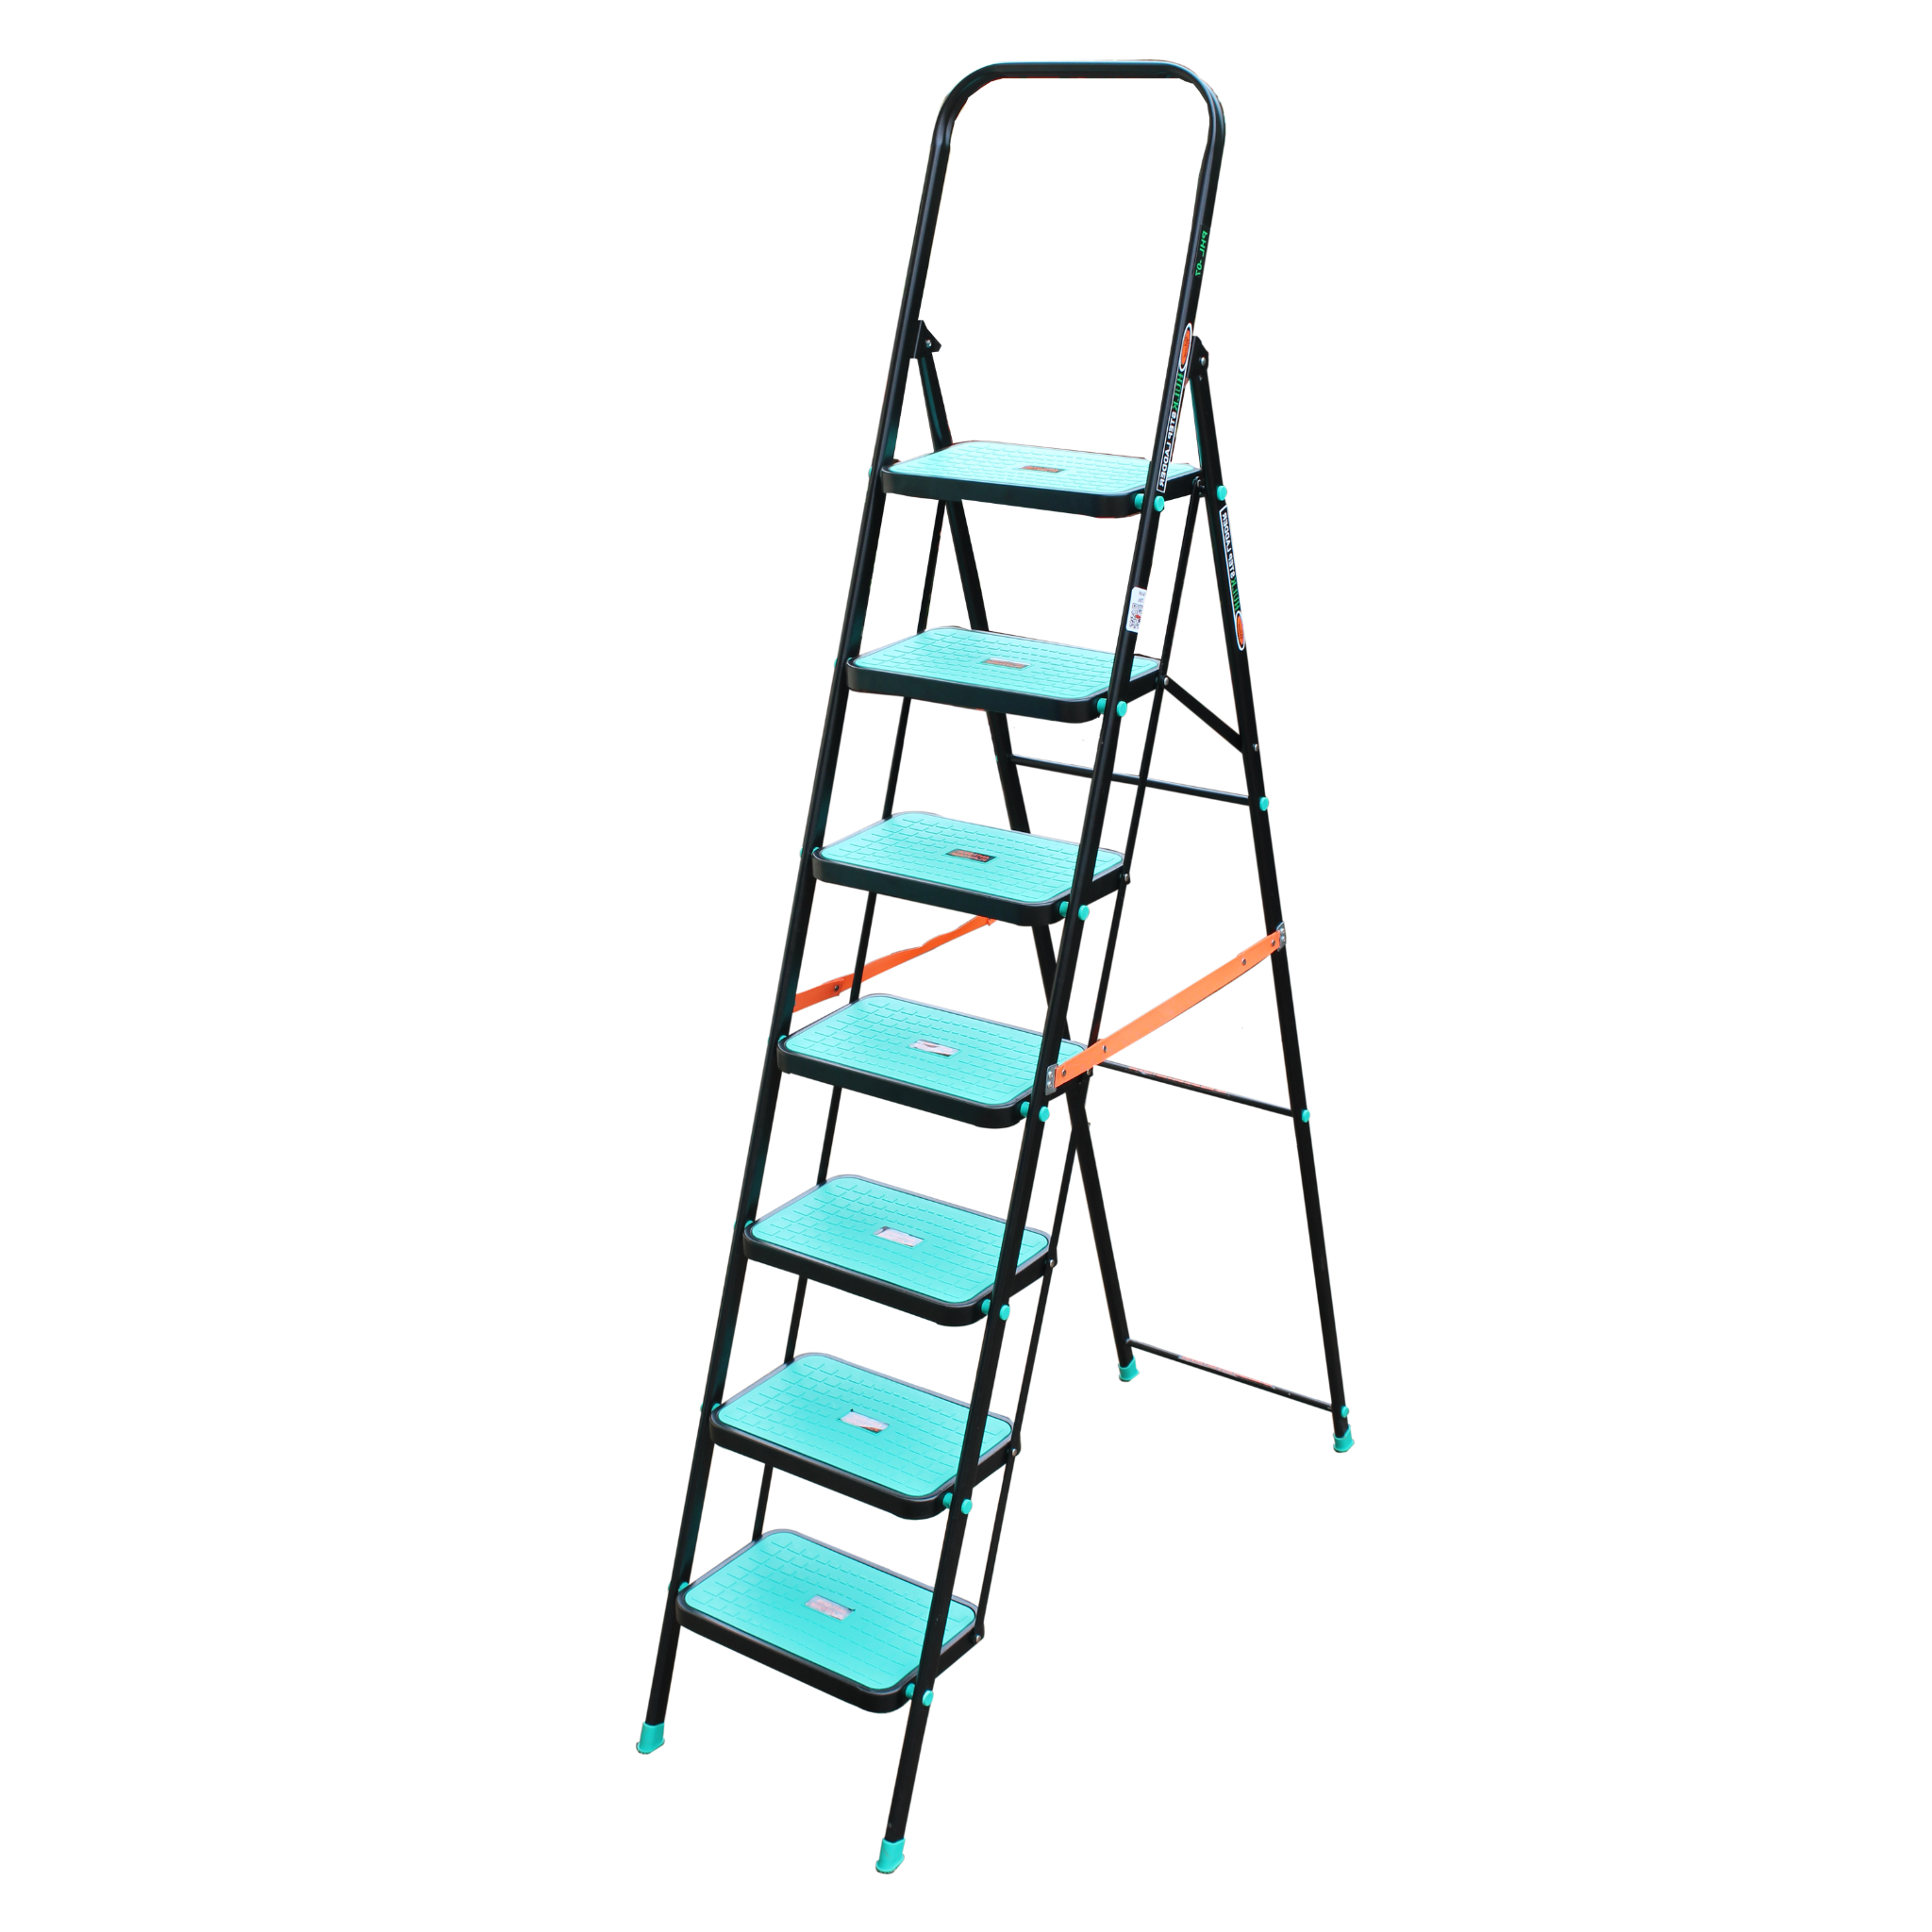 Prime Hulk Foldable Steel Ladder for Home with Anti-Slip Steps